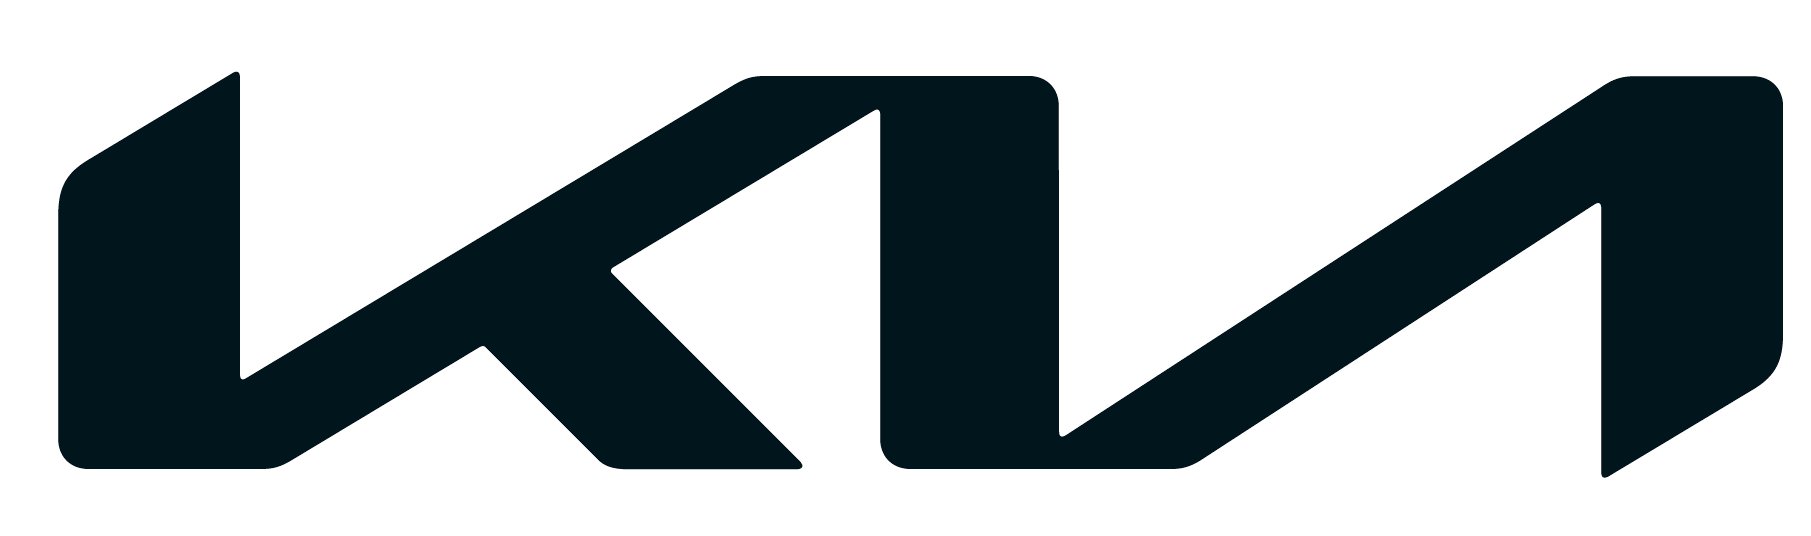 Tải Logo Kia File Vector, Ai, Eps, Svg, Png, Cdr